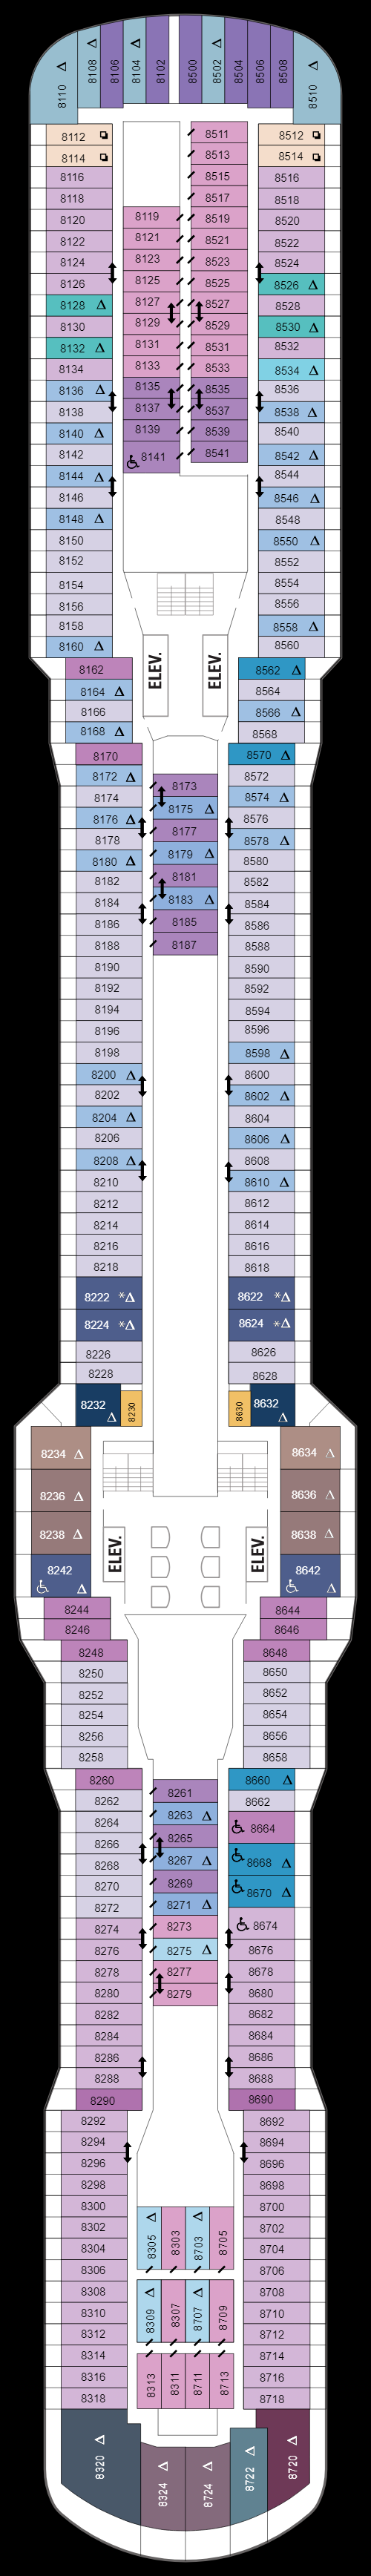 Deck 8 (12 April 2020 to 18 April 2021)